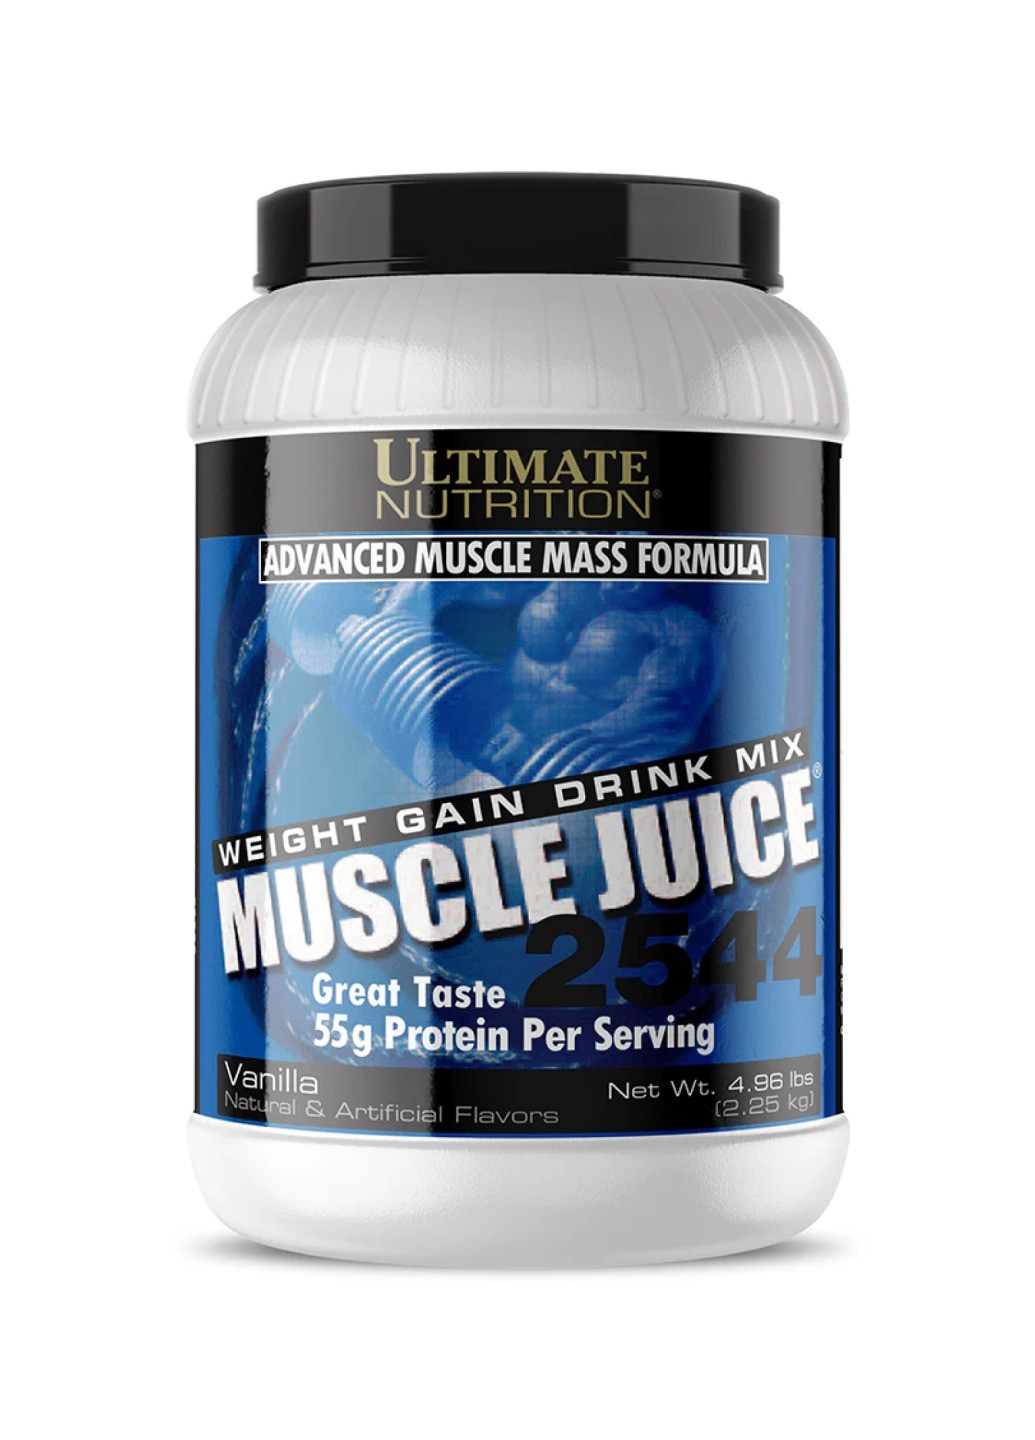 Гейнер для набора мышечной массы Muscle Juice 2544 – 2250g Vanilla Ultimate Nutrition (270007779)